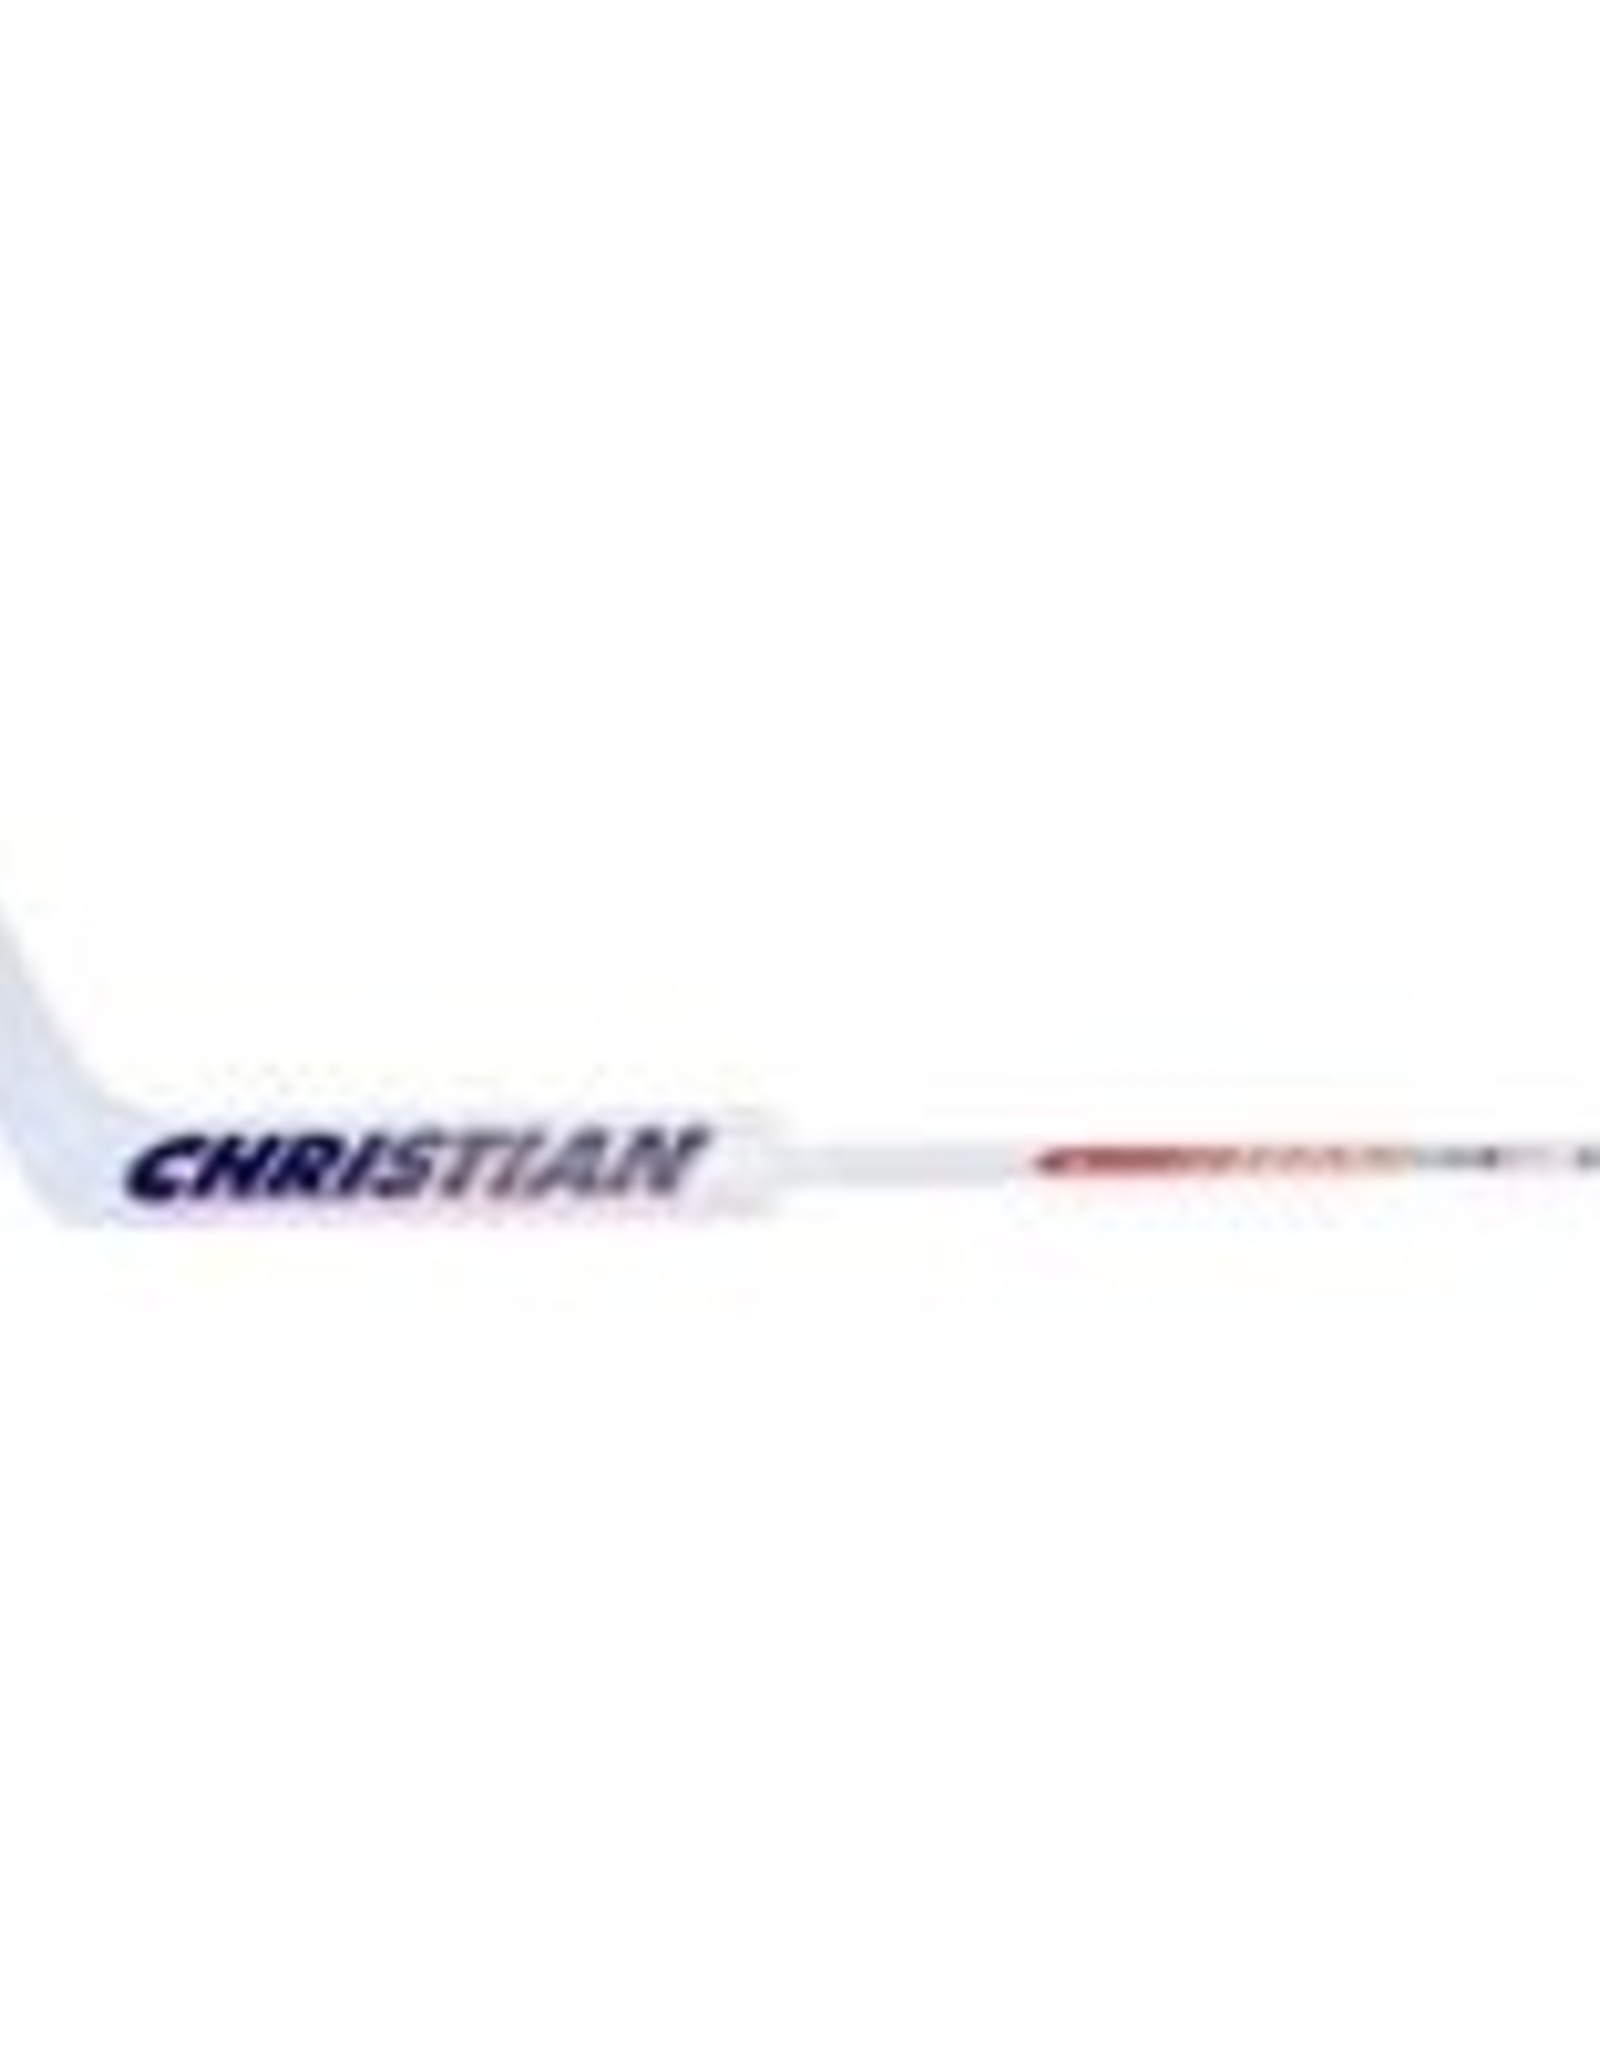 Christian Christian 440 Goalie Stick (JUNIOR)